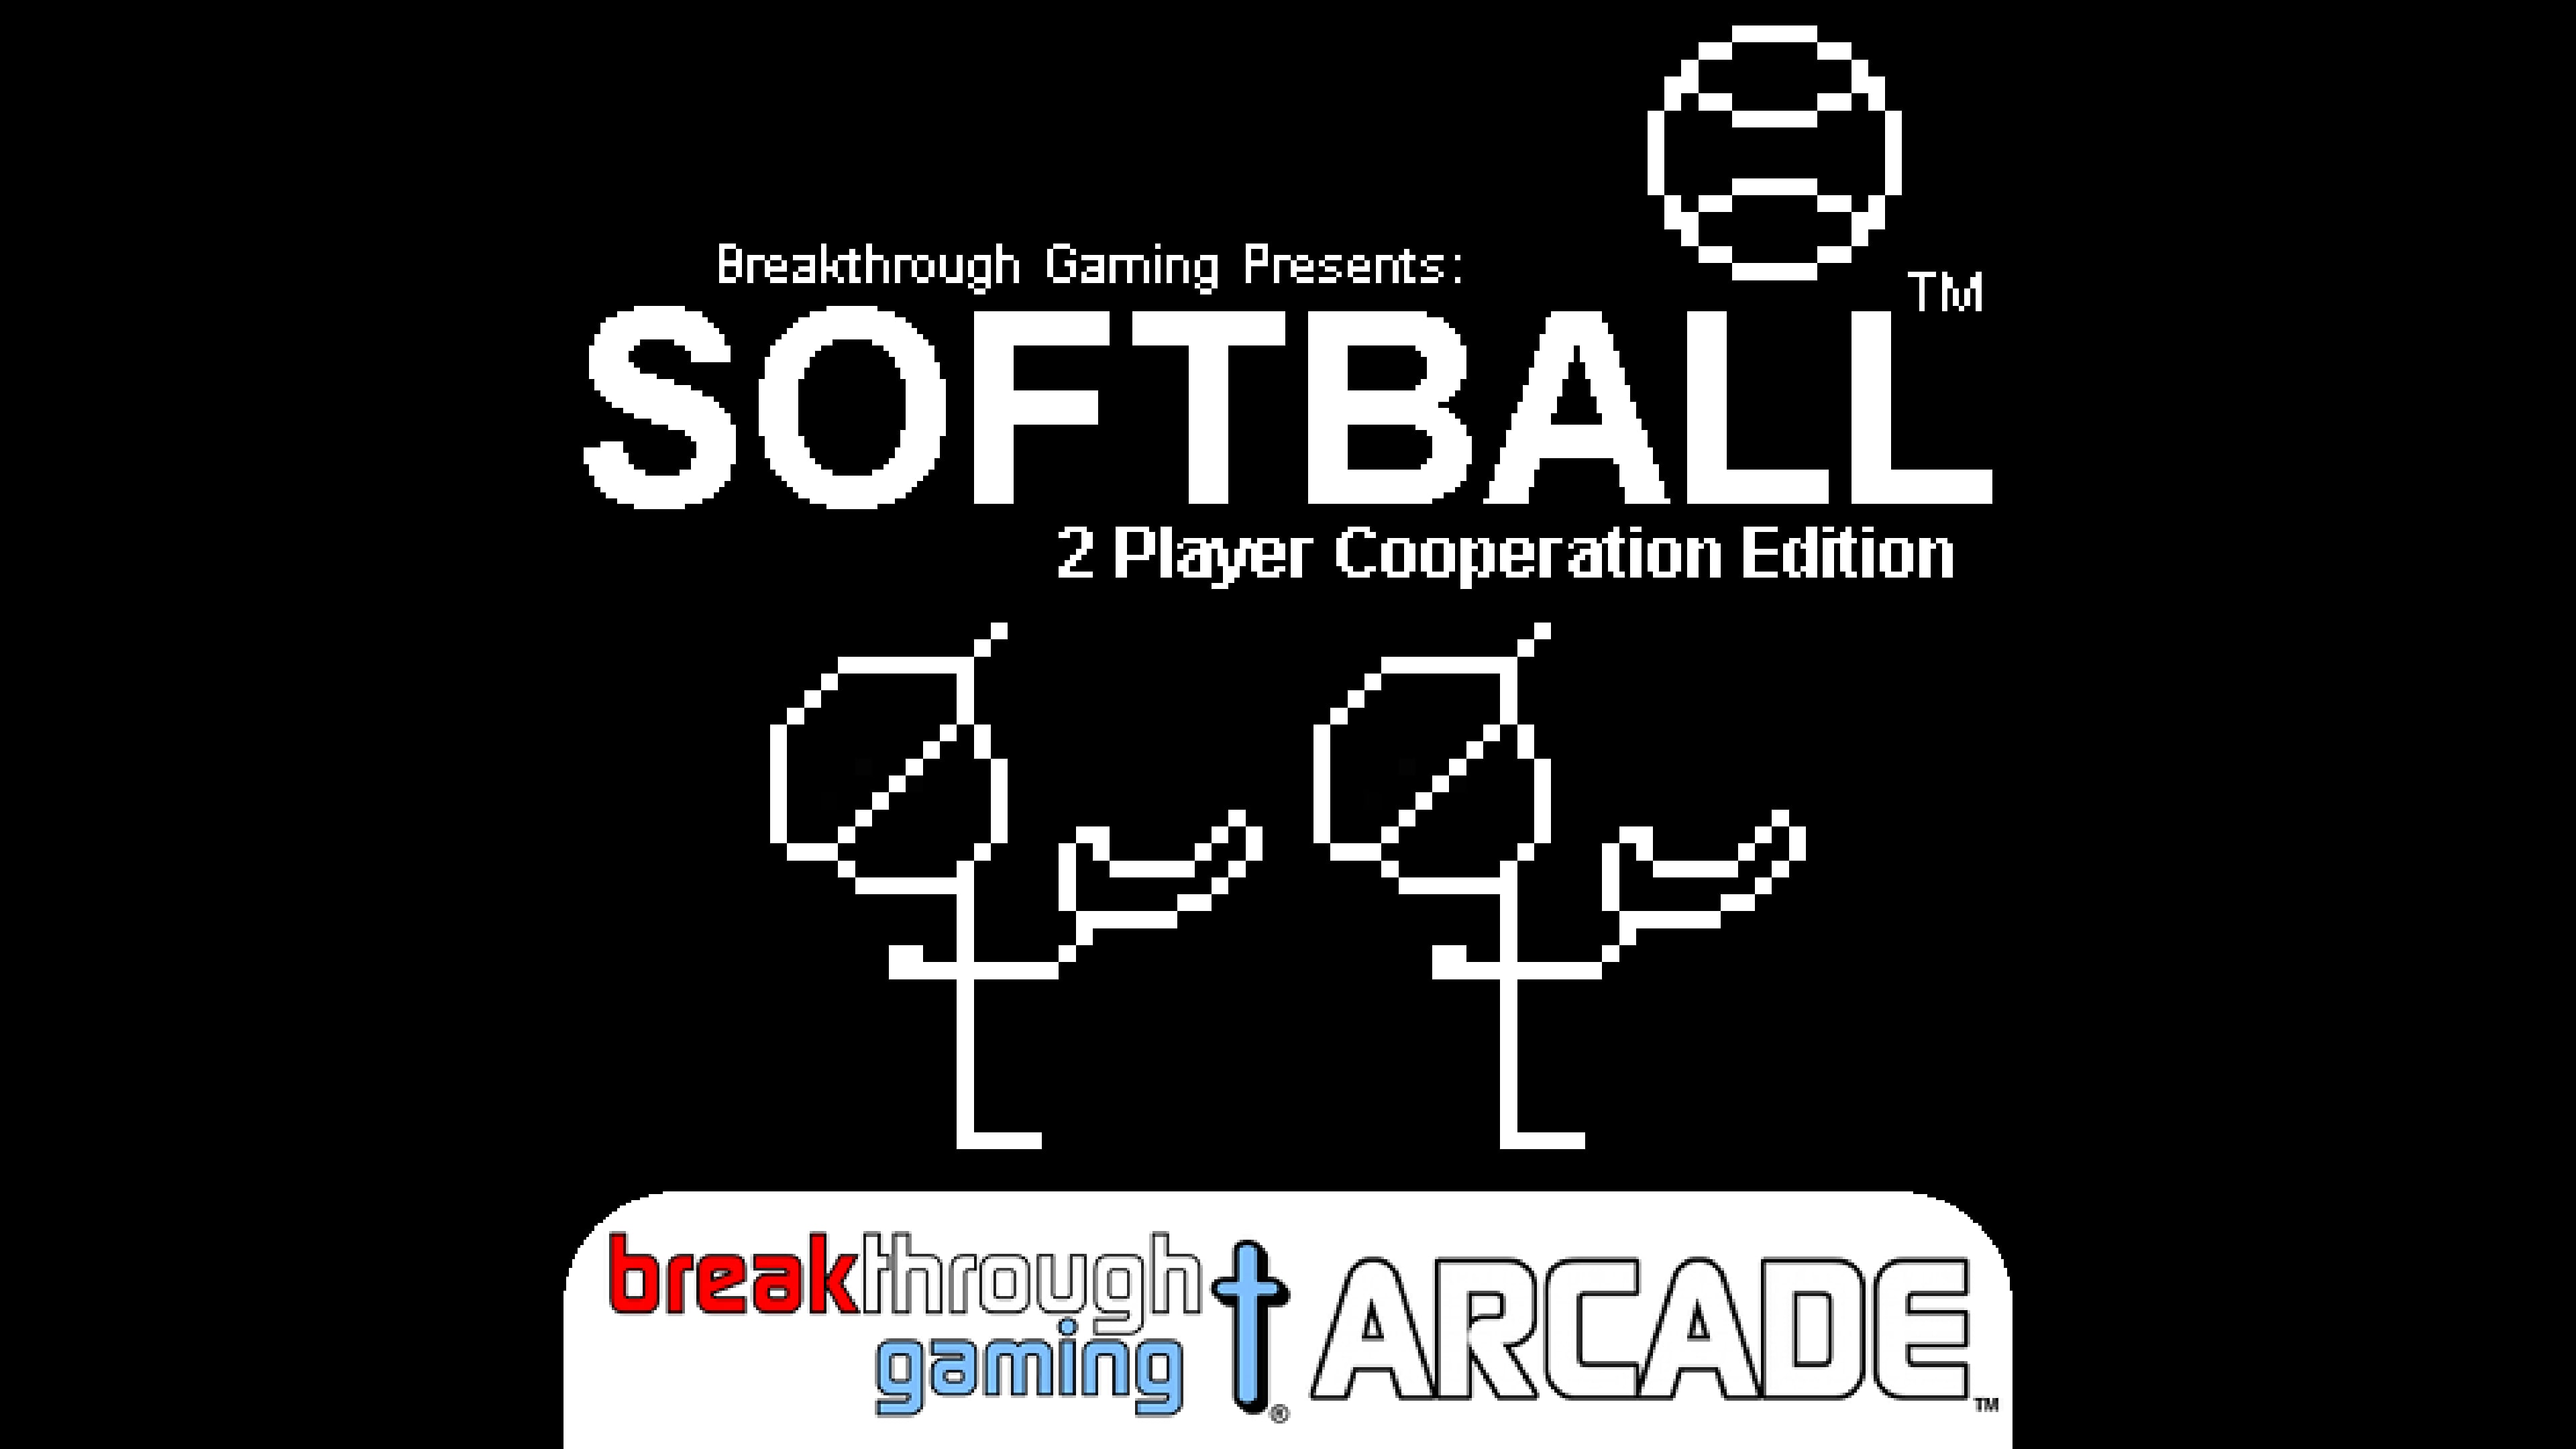 Softball (2 Player Cooperation Edition) - Breakthrough Gaming Arcade